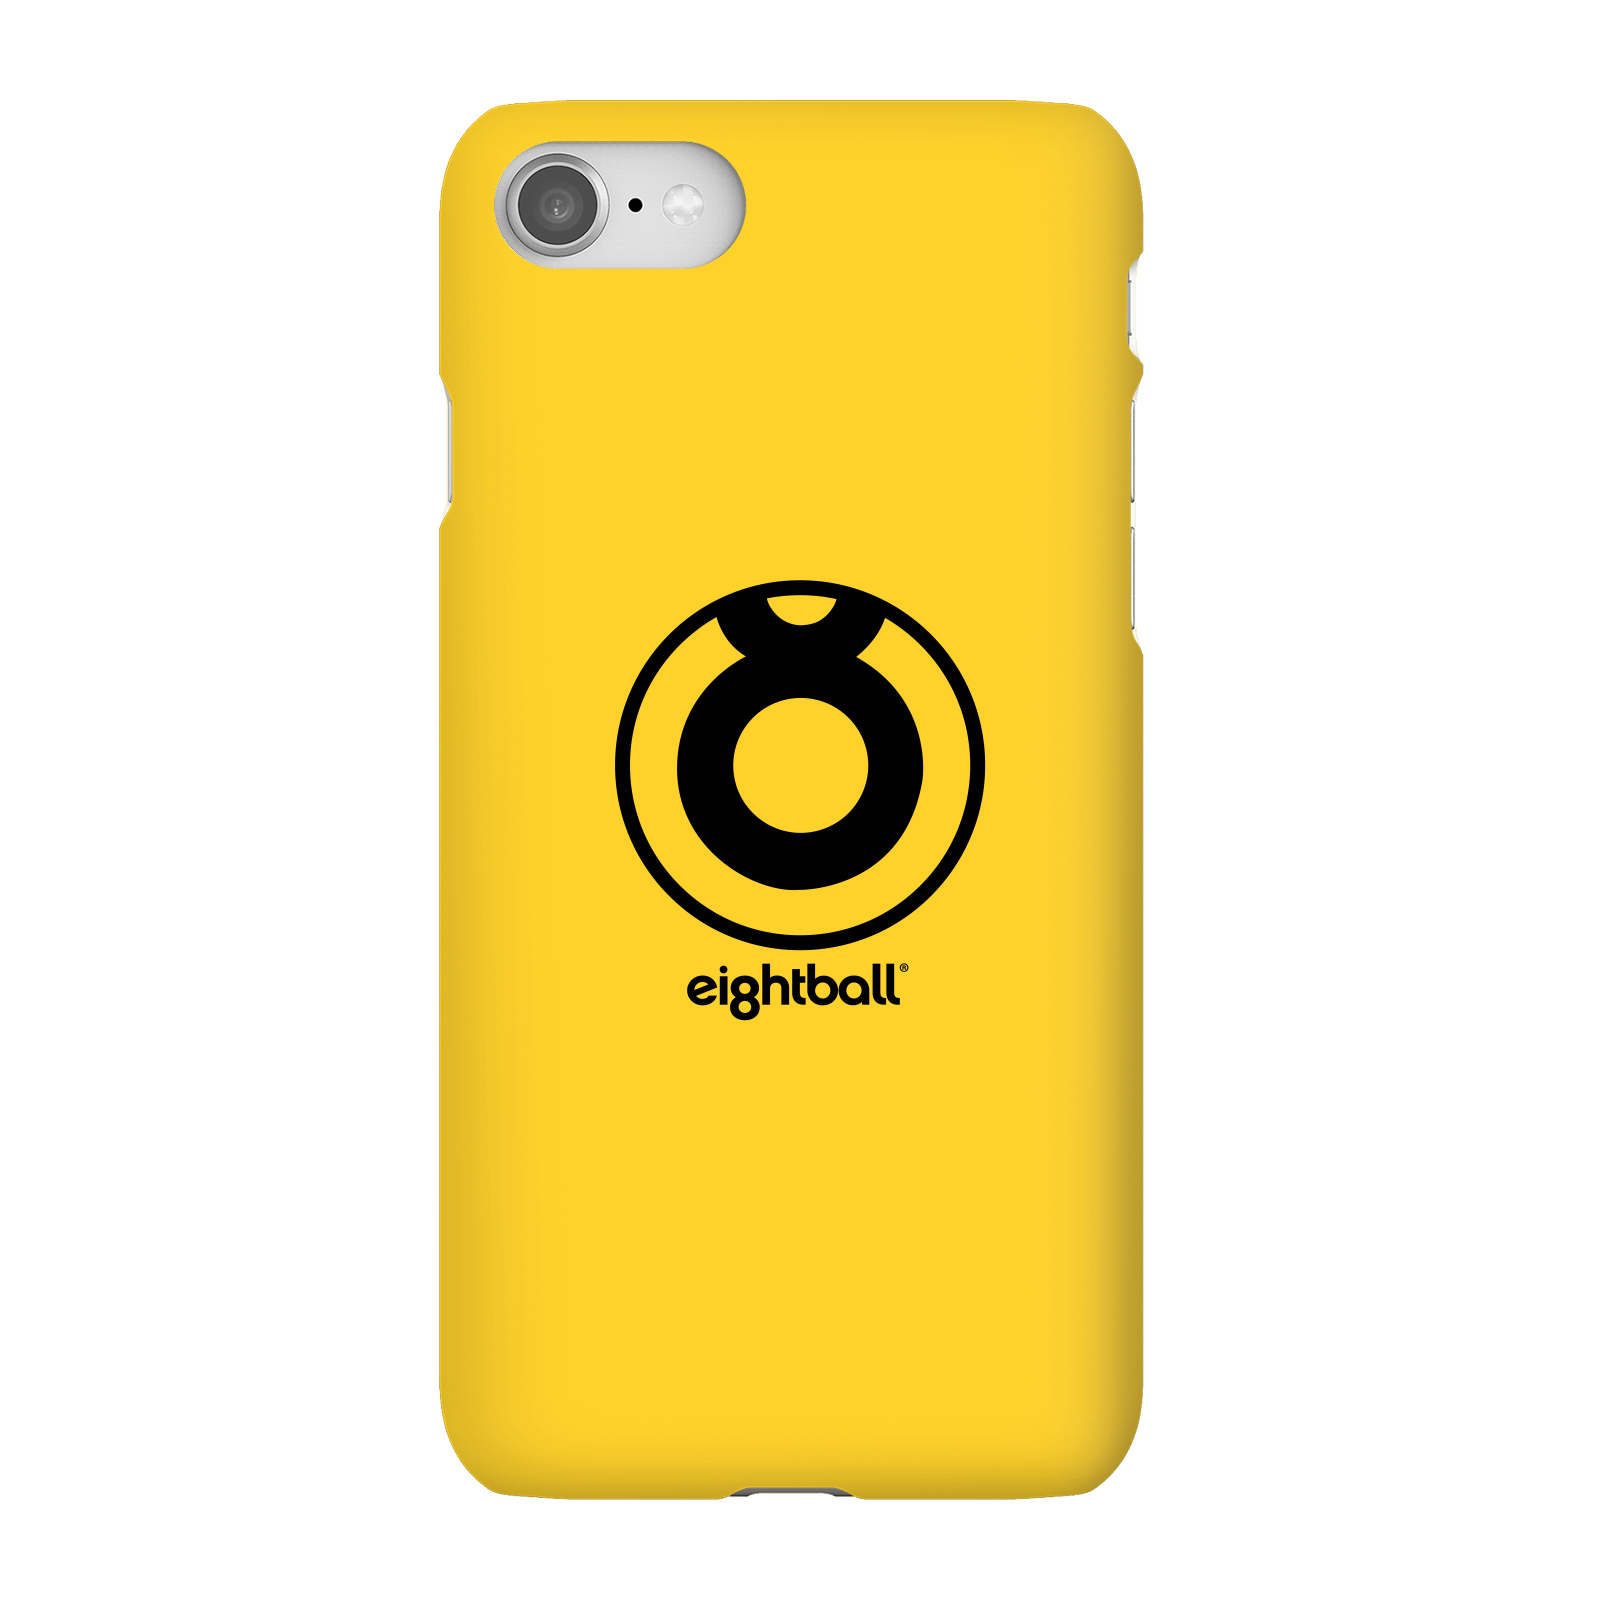 Funda Móvil Ei8htball Large Circle Logo para iPhone y Android - iPhone 8 - Carcasa rígida - Mate